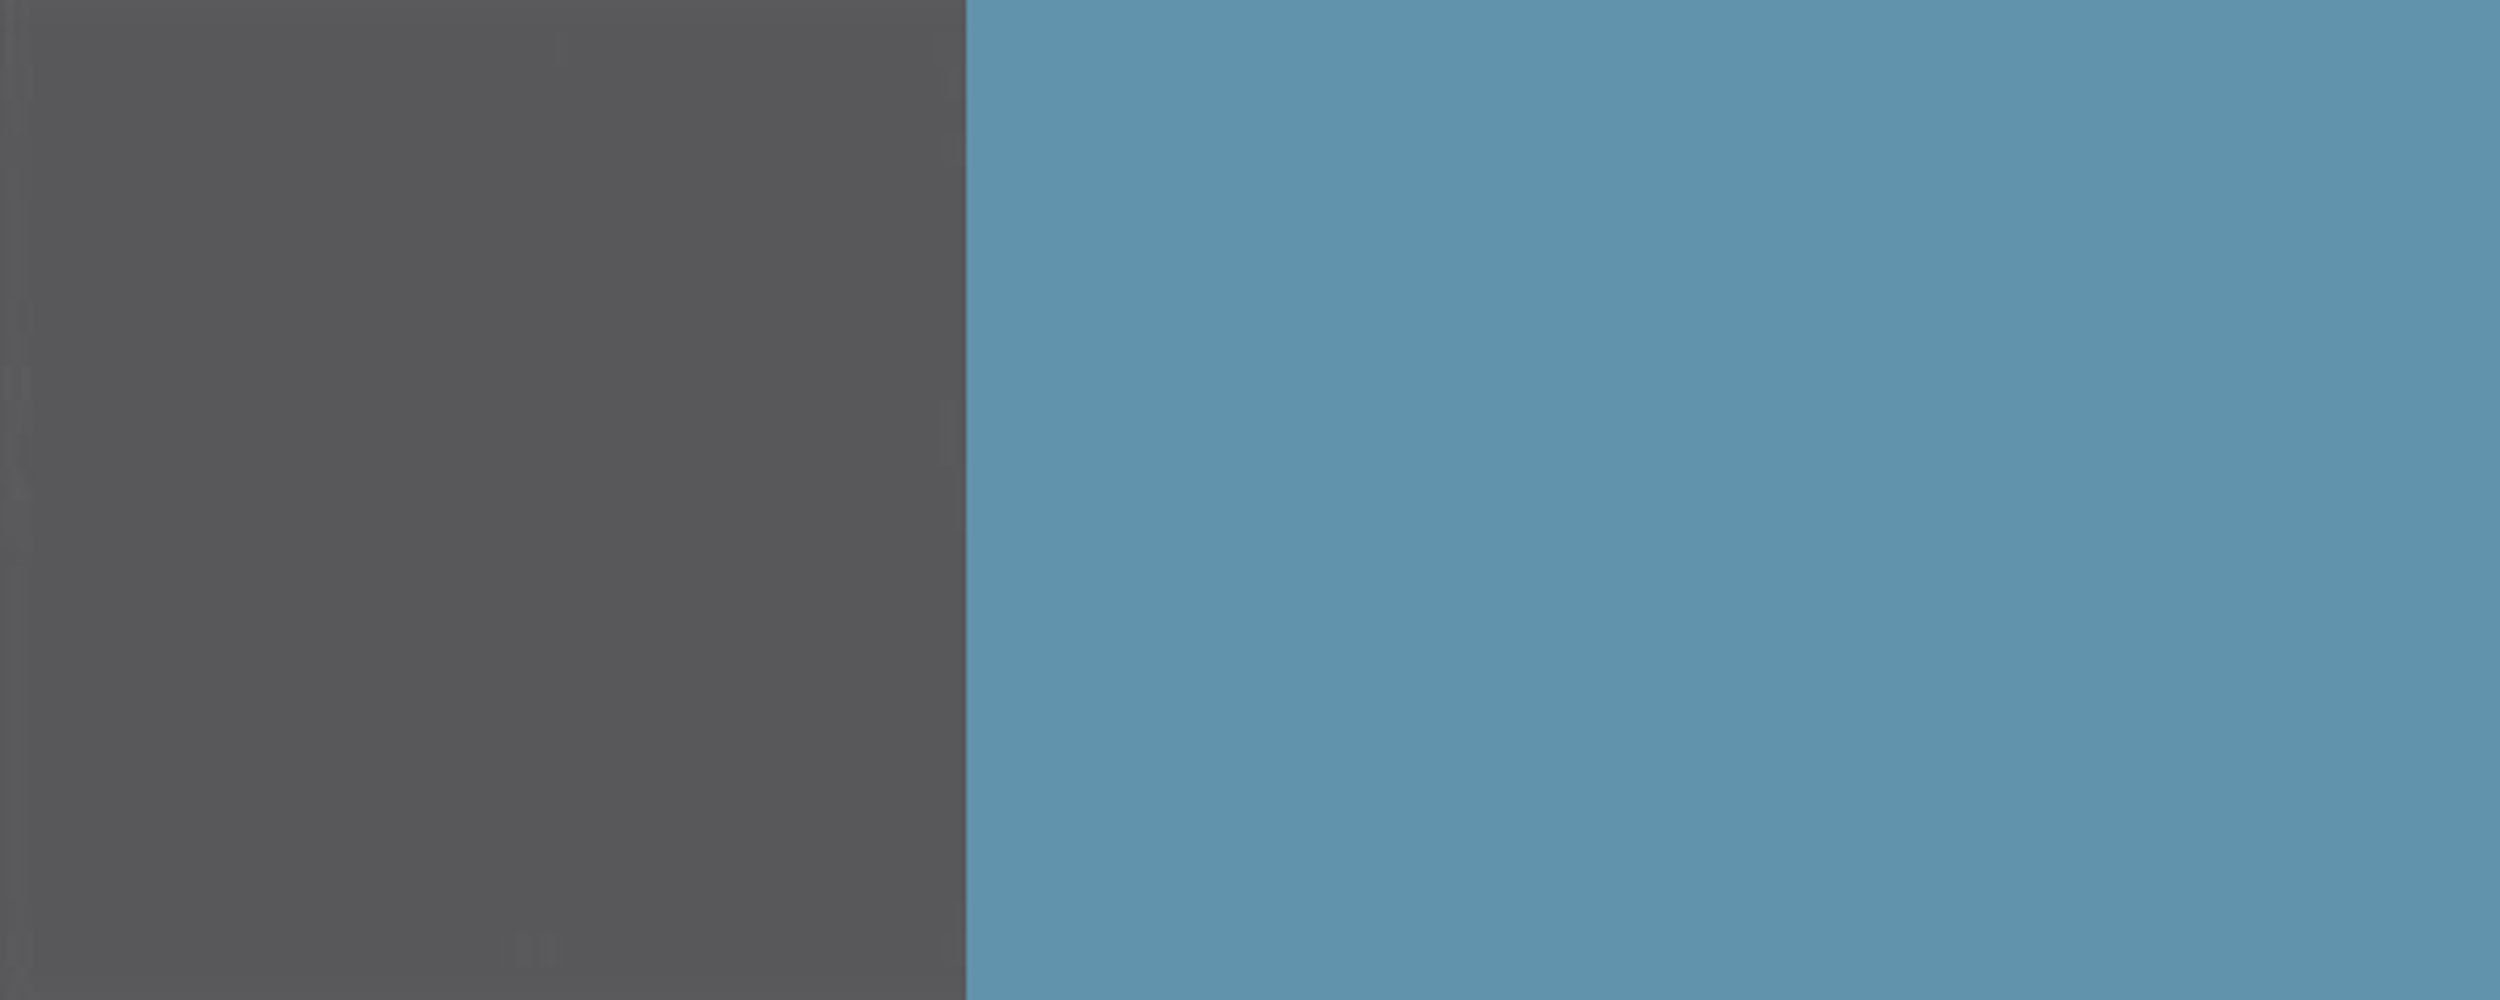 30cm 1-türig Klapphängeschrank pastellblau Front- RAL wählbar (Rimini) Feldmann-Wohnen und Rimini matt 5024 Korpusfarbe